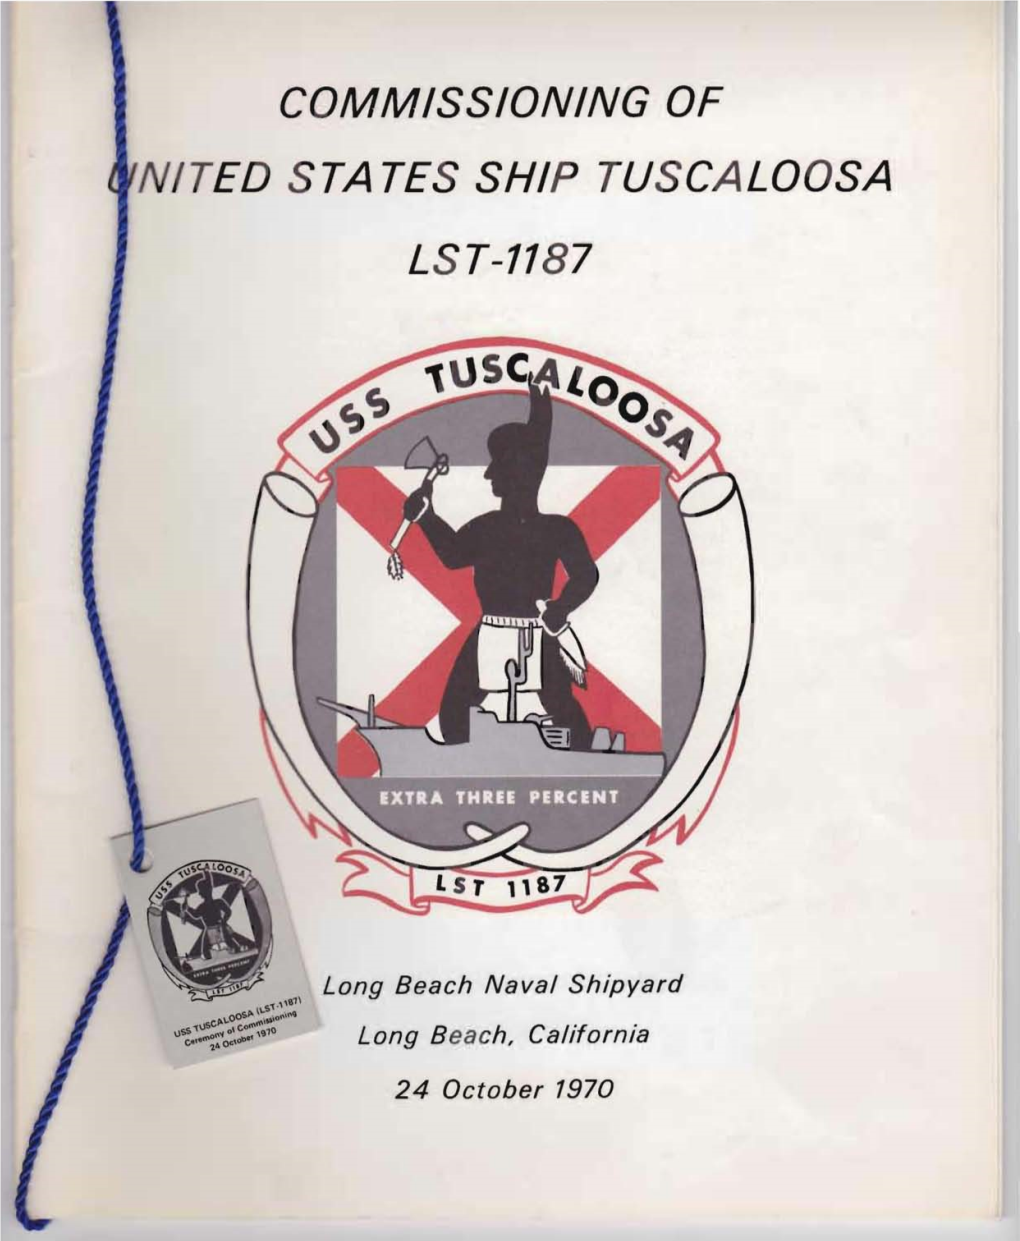 Commissioning of Nited States Ship Tuscaloosa Ls T-11